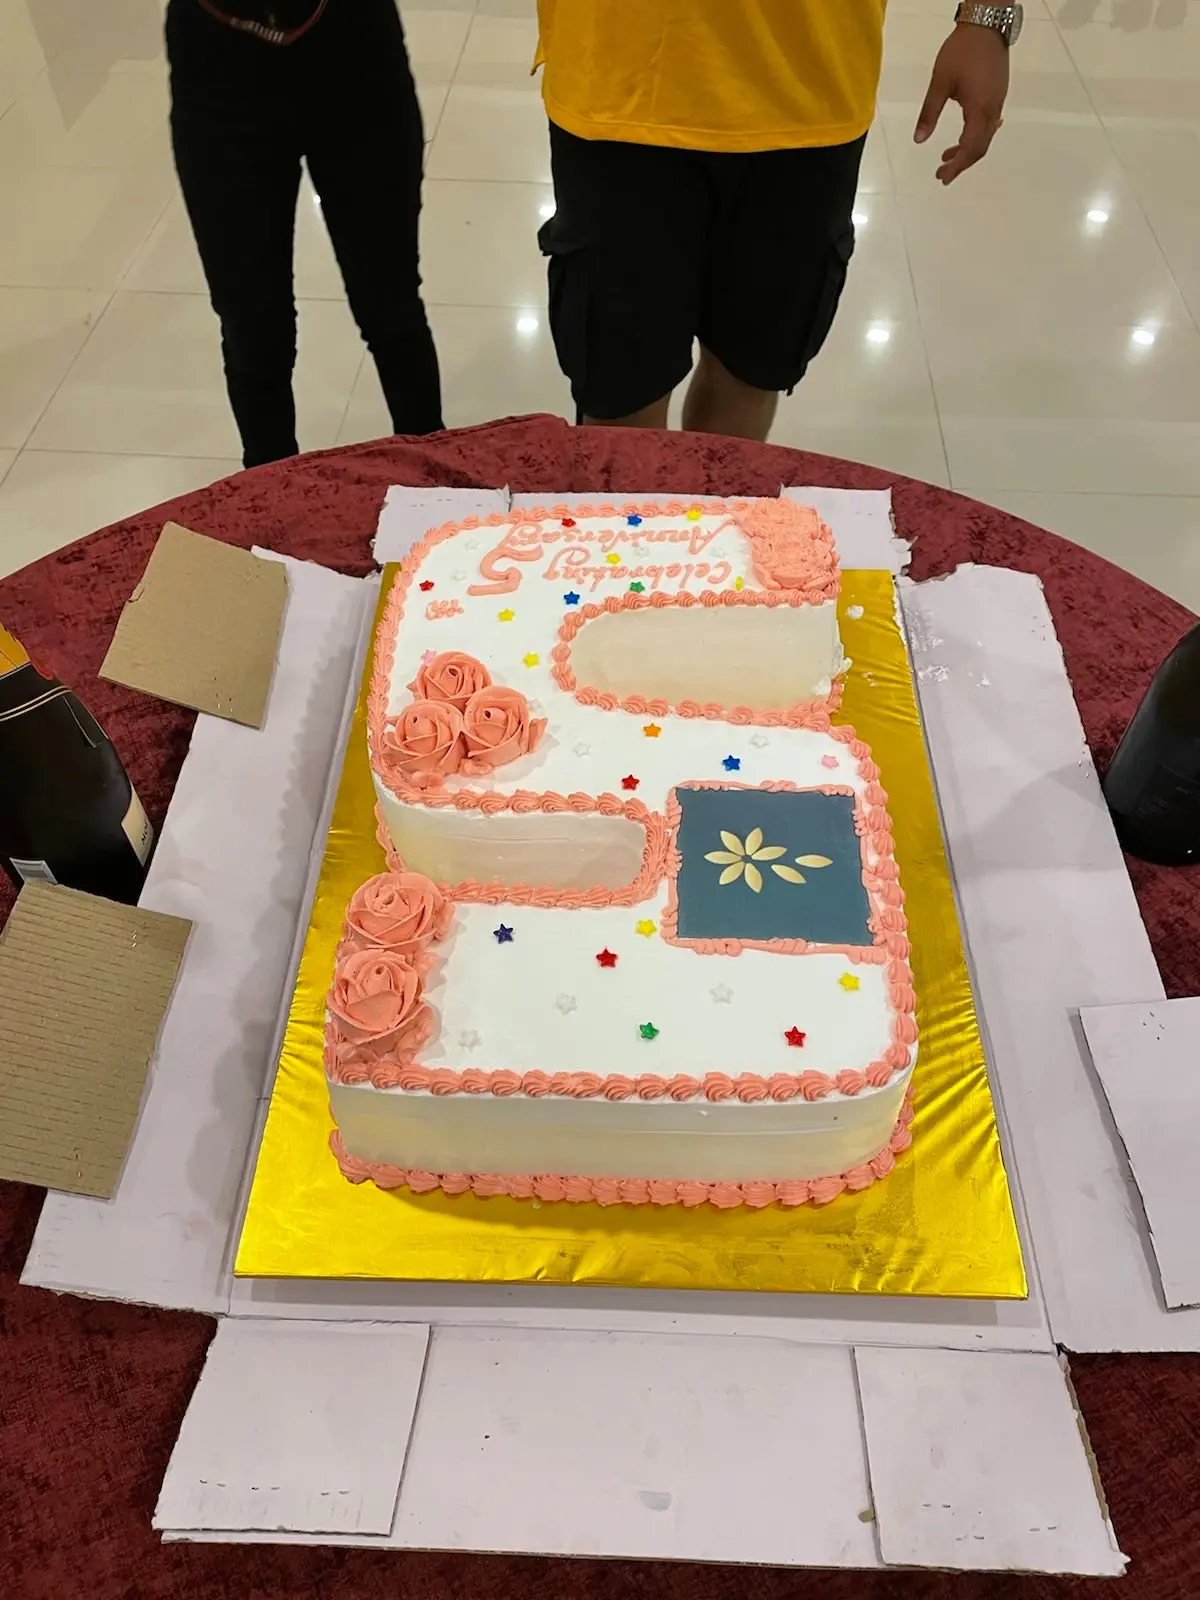 Fifth year anniversary celebration cake